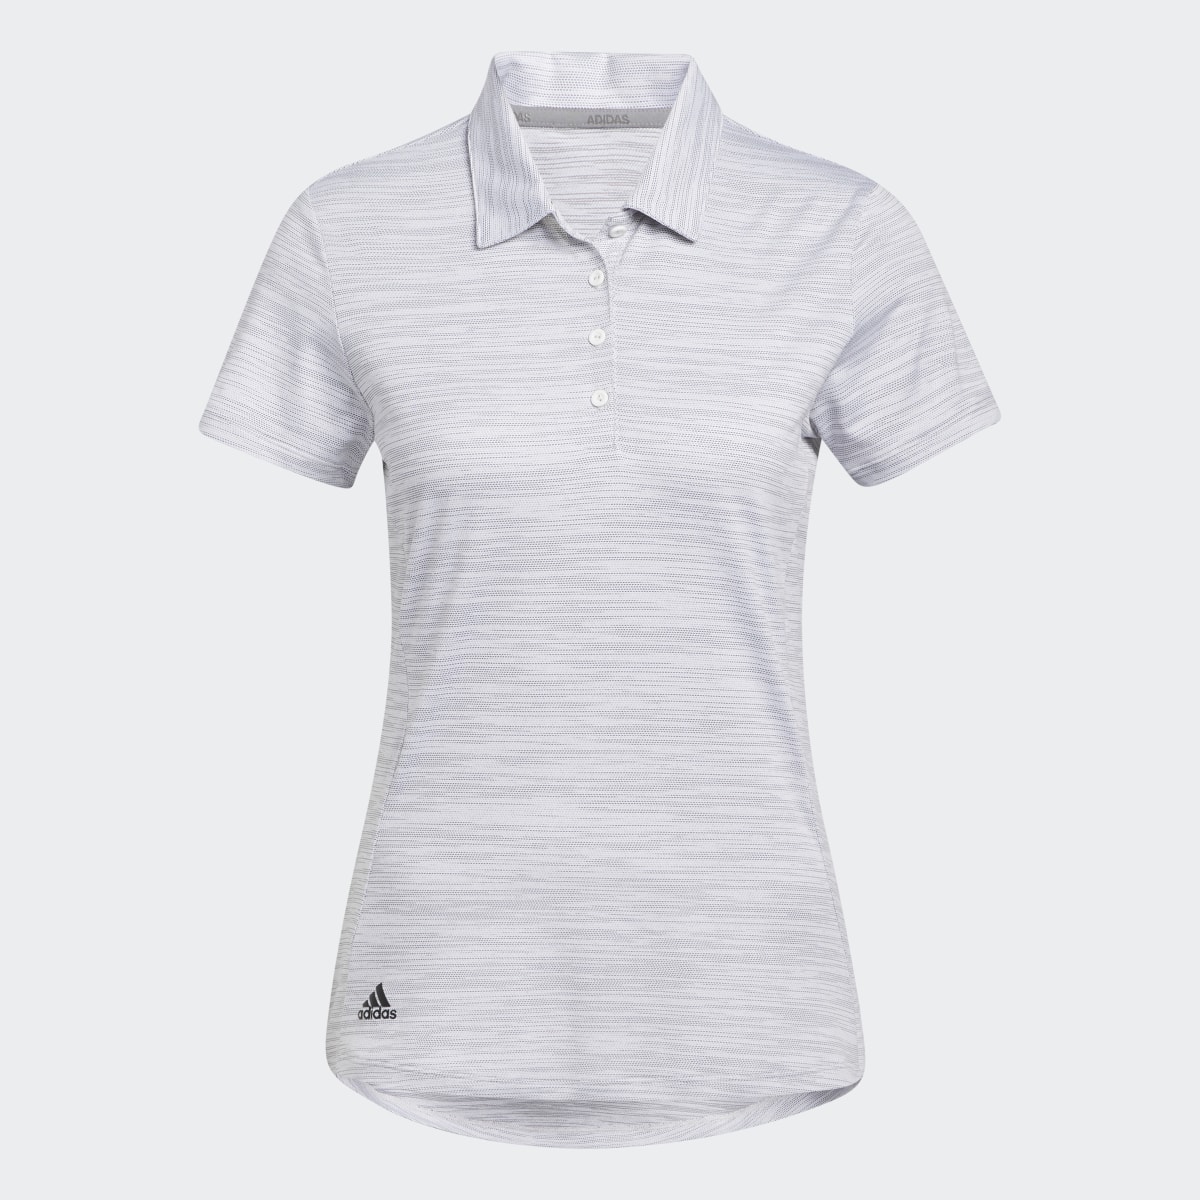 Adidas Space-Dyed Short Sleeve Polo Shirt. 5